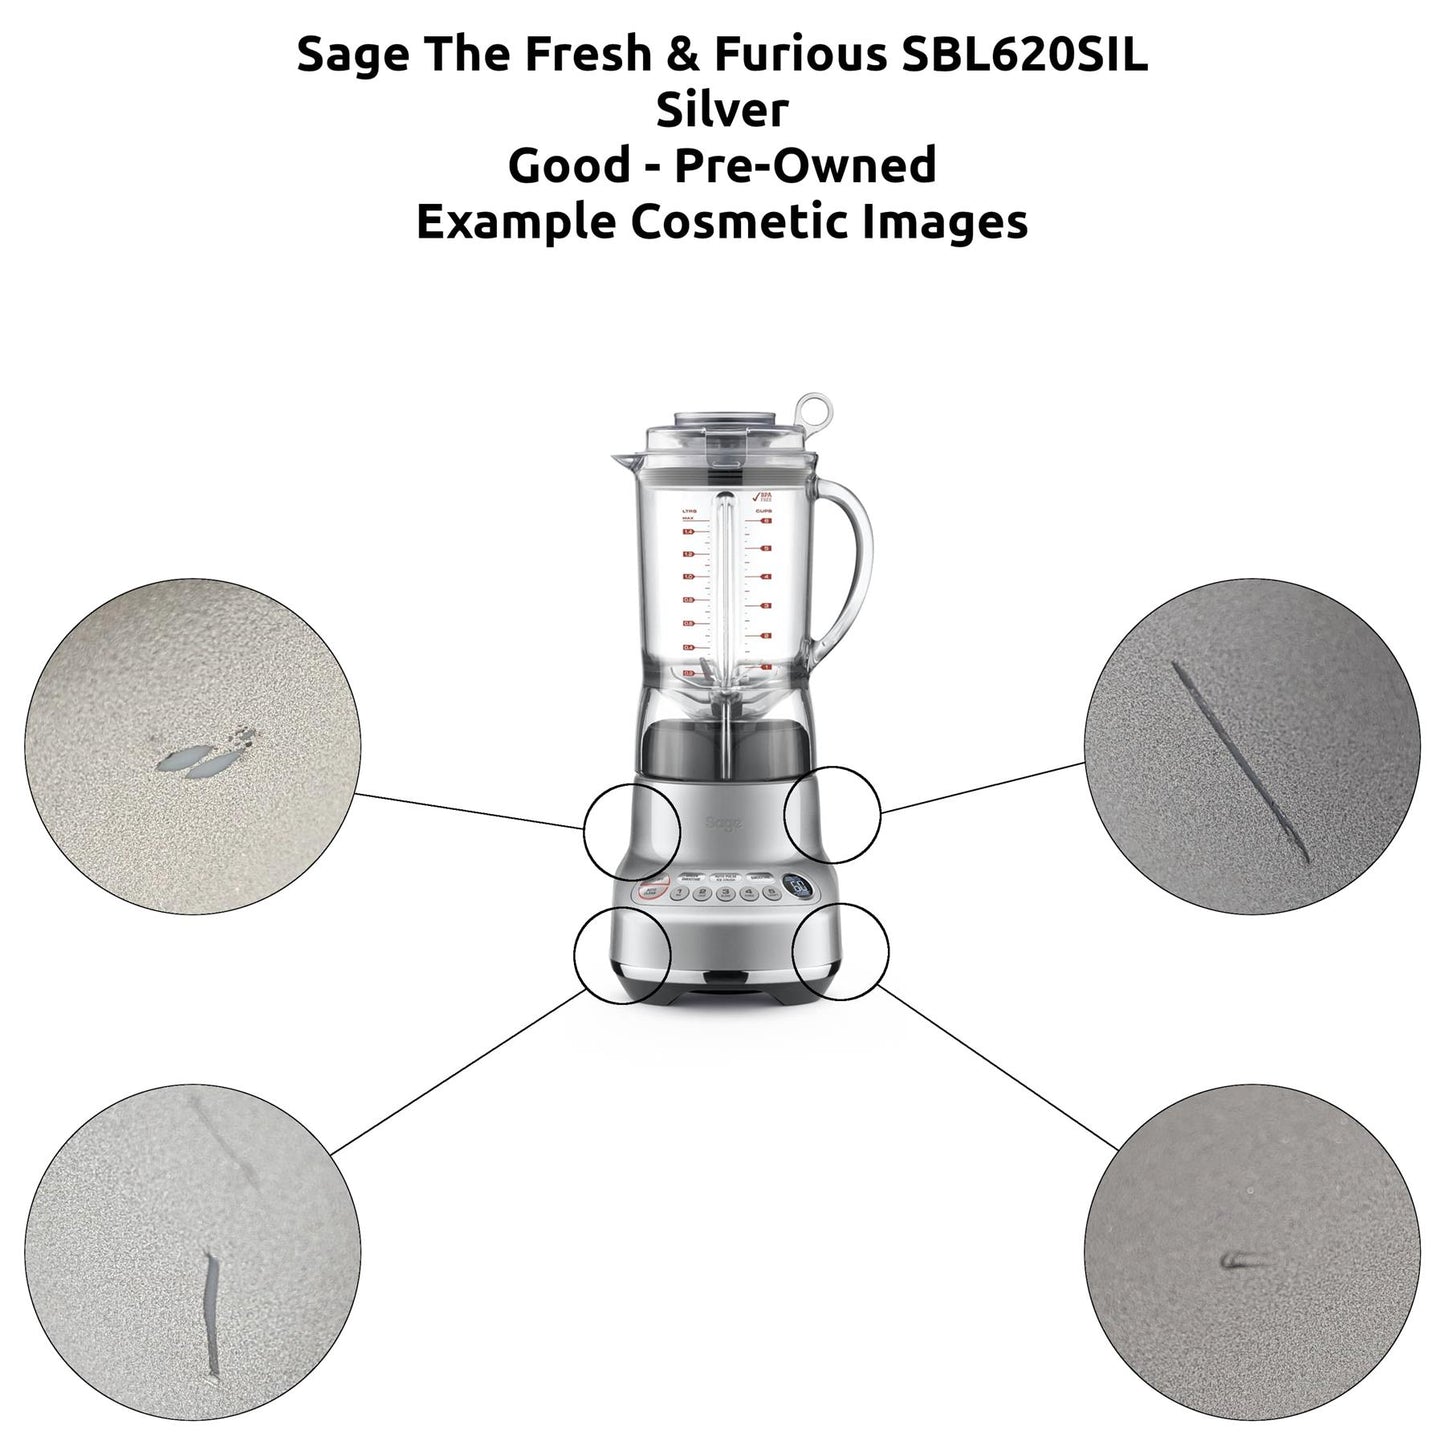 Sage The Fresh & Furious SBL620 Blender